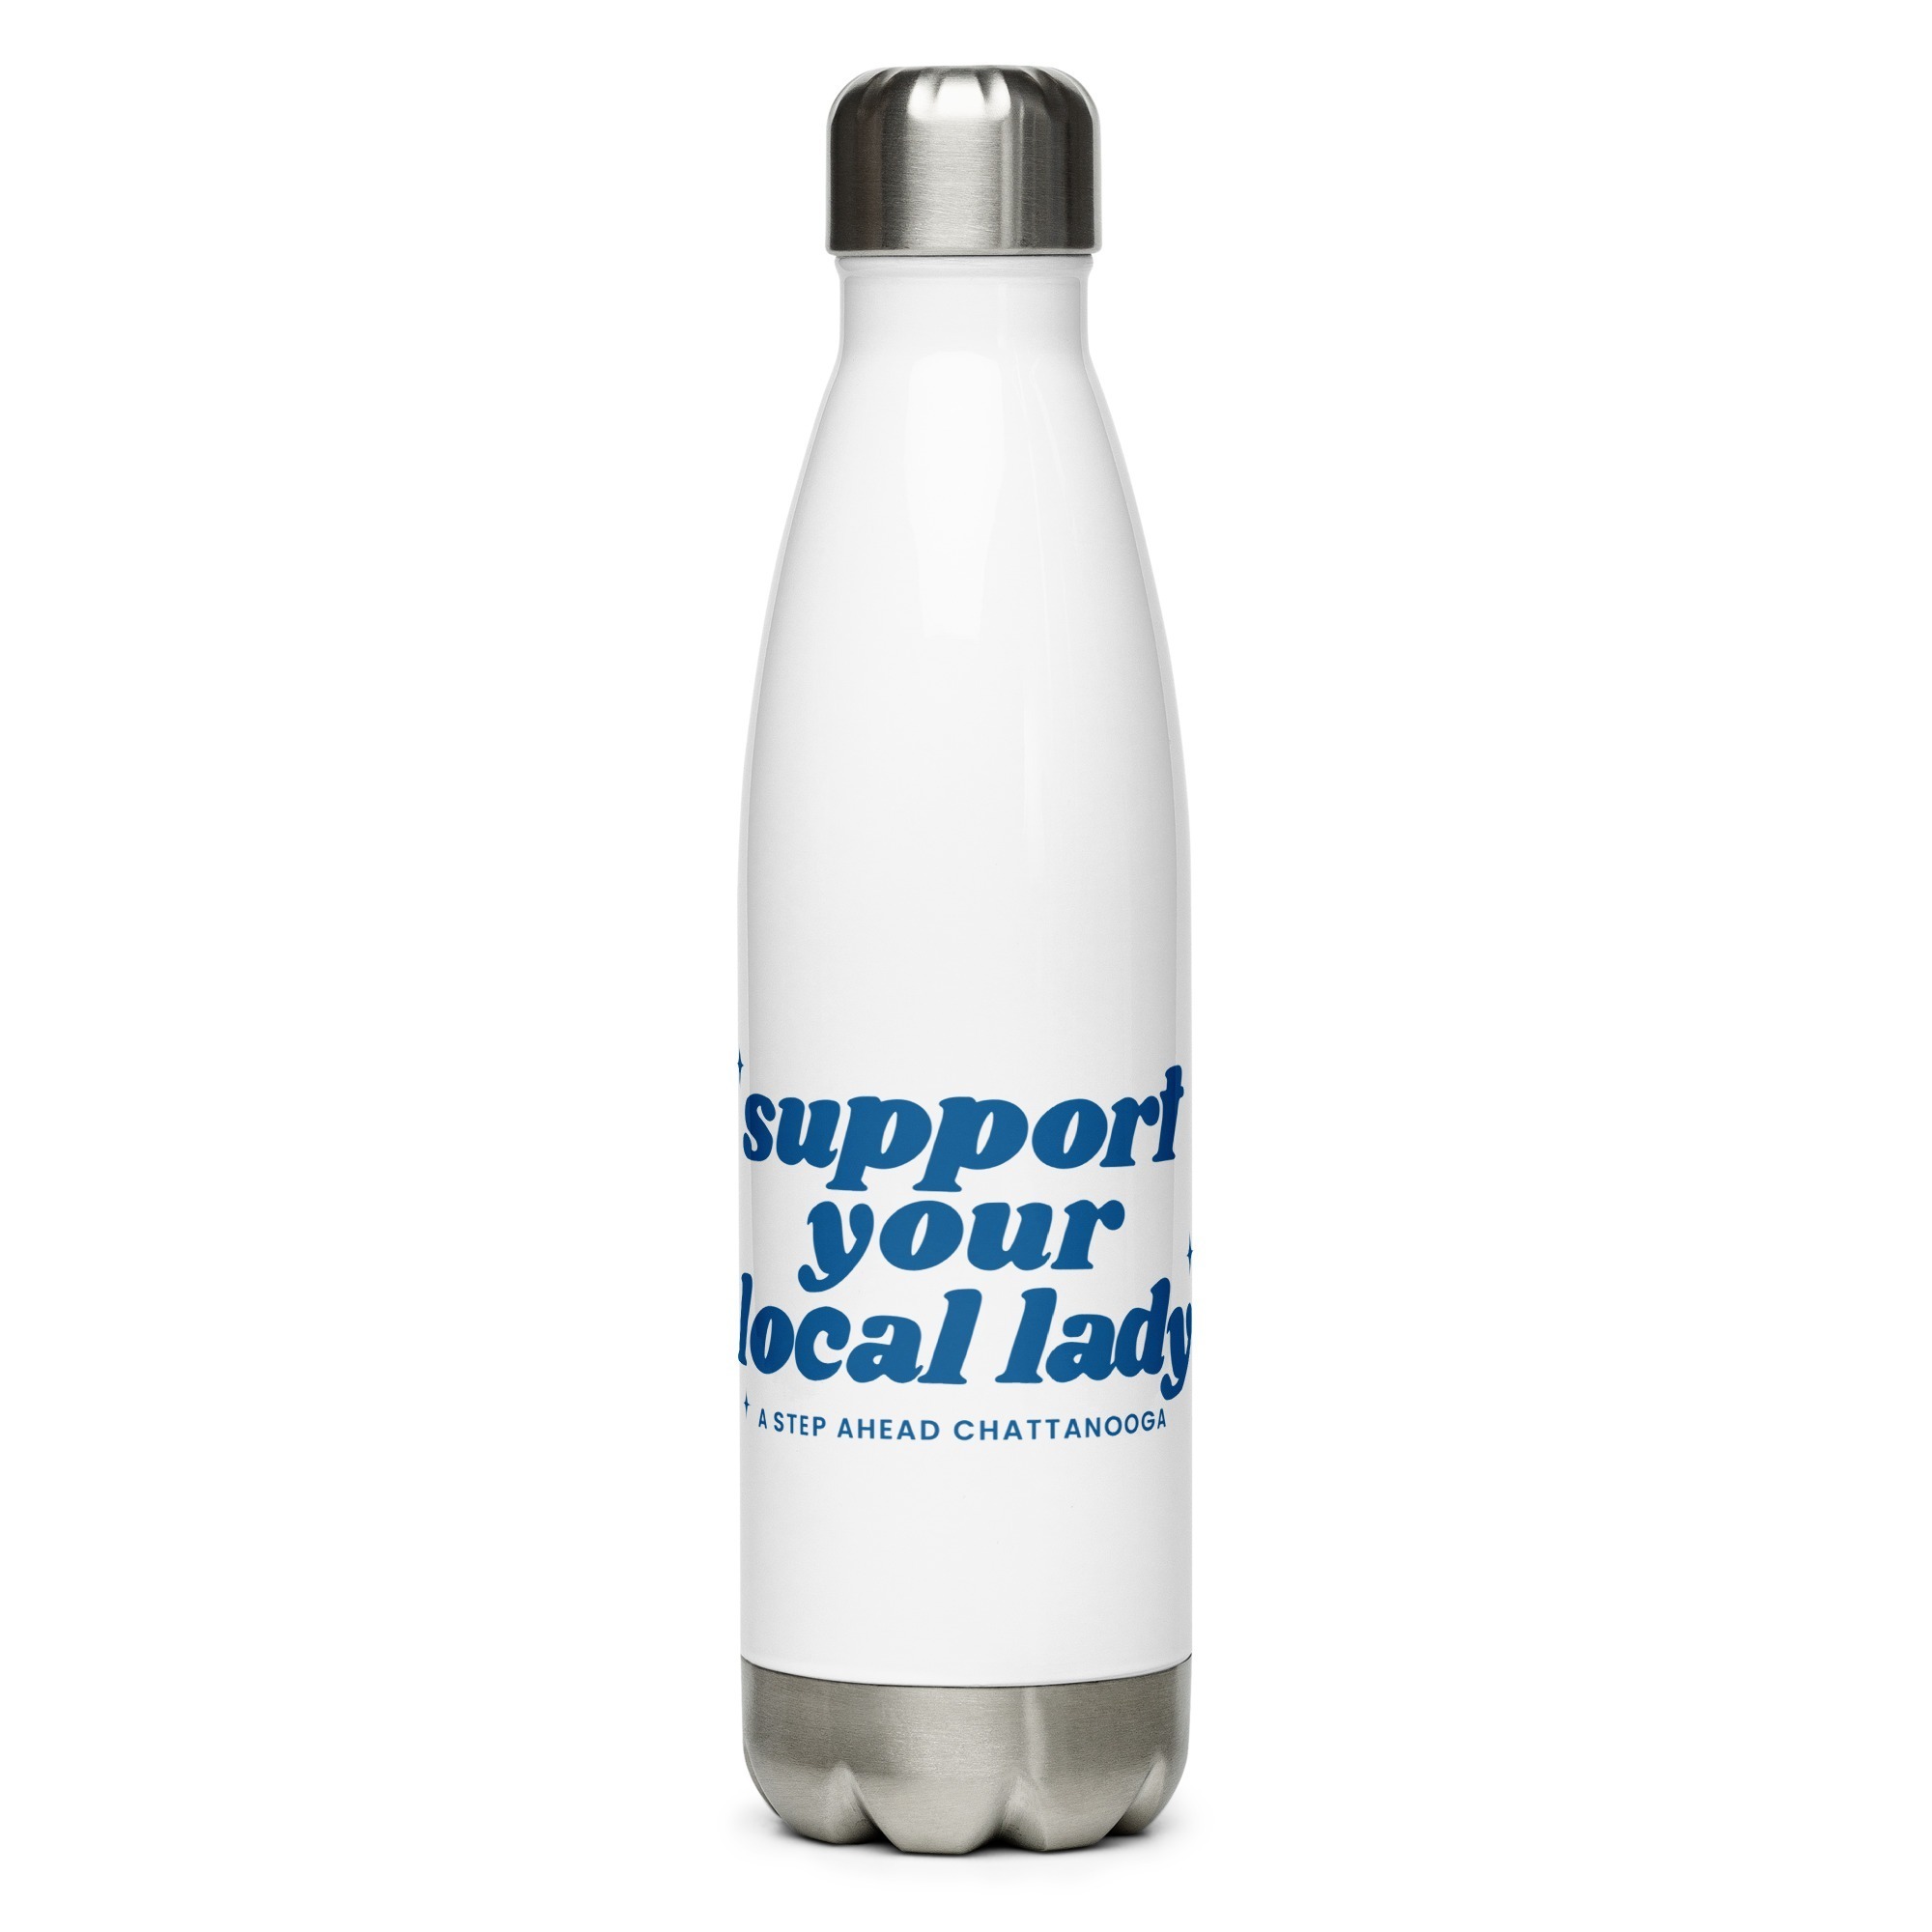 https://www.astepaheadchattanooga.org/wp-content/uploads/2022/06/stainless-steel-water-bottle-white-17oz-front-62ab9a33da61d.jpg